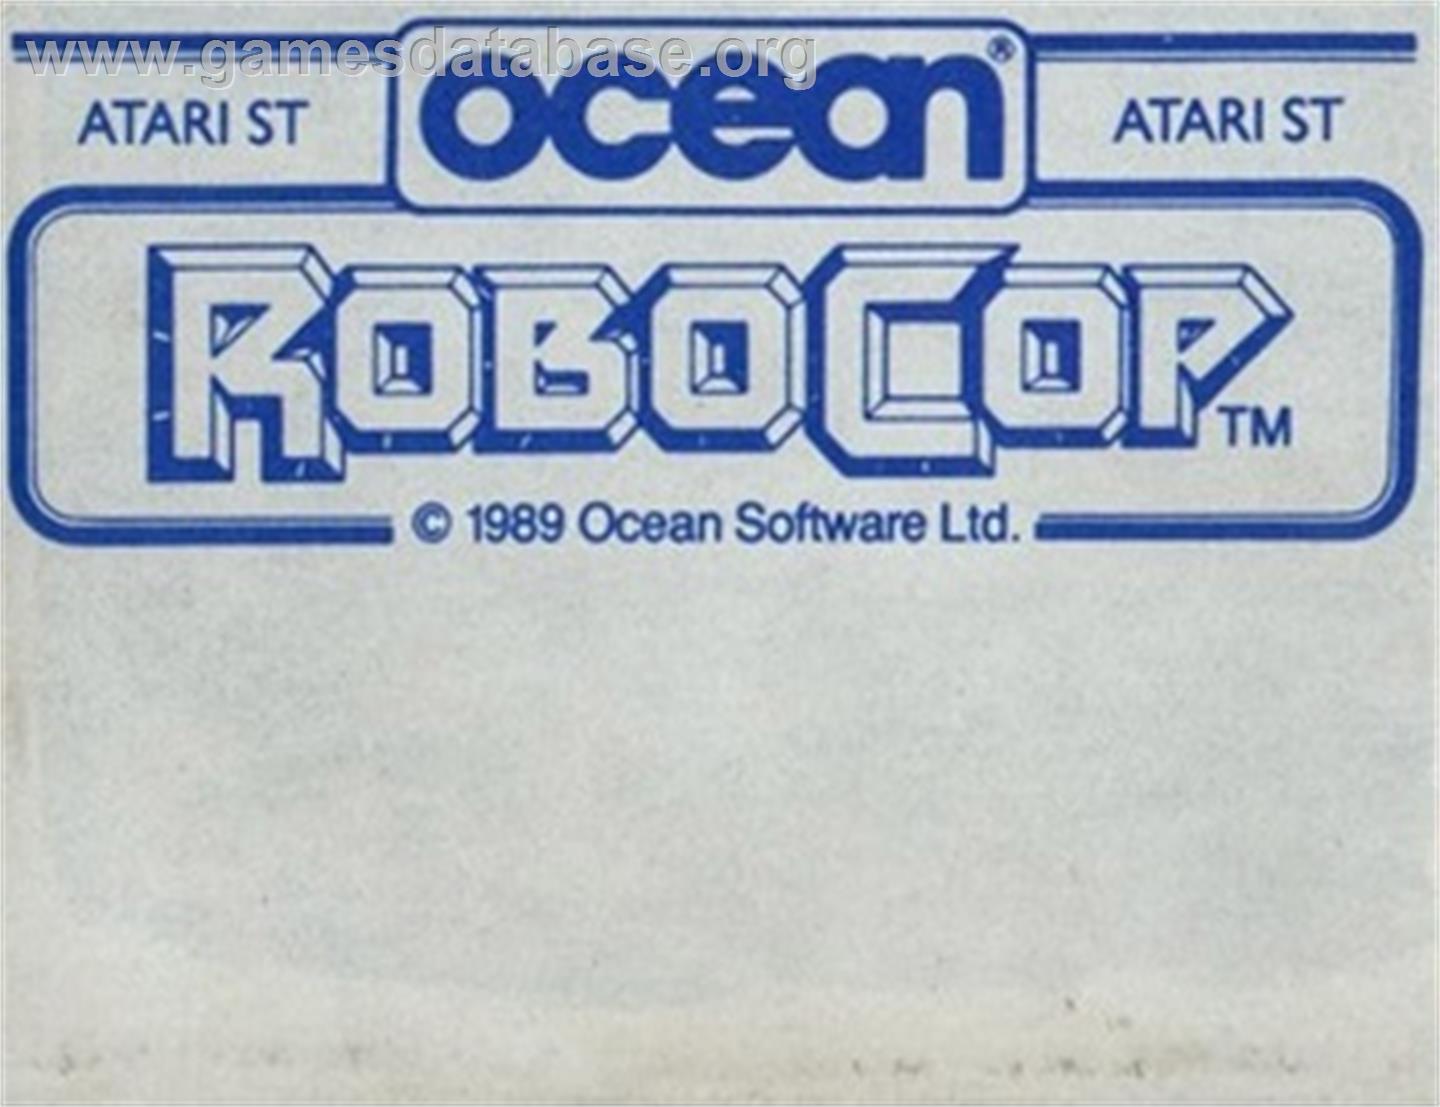 Robocop - Atari ST - Artwork - Cartridge Top